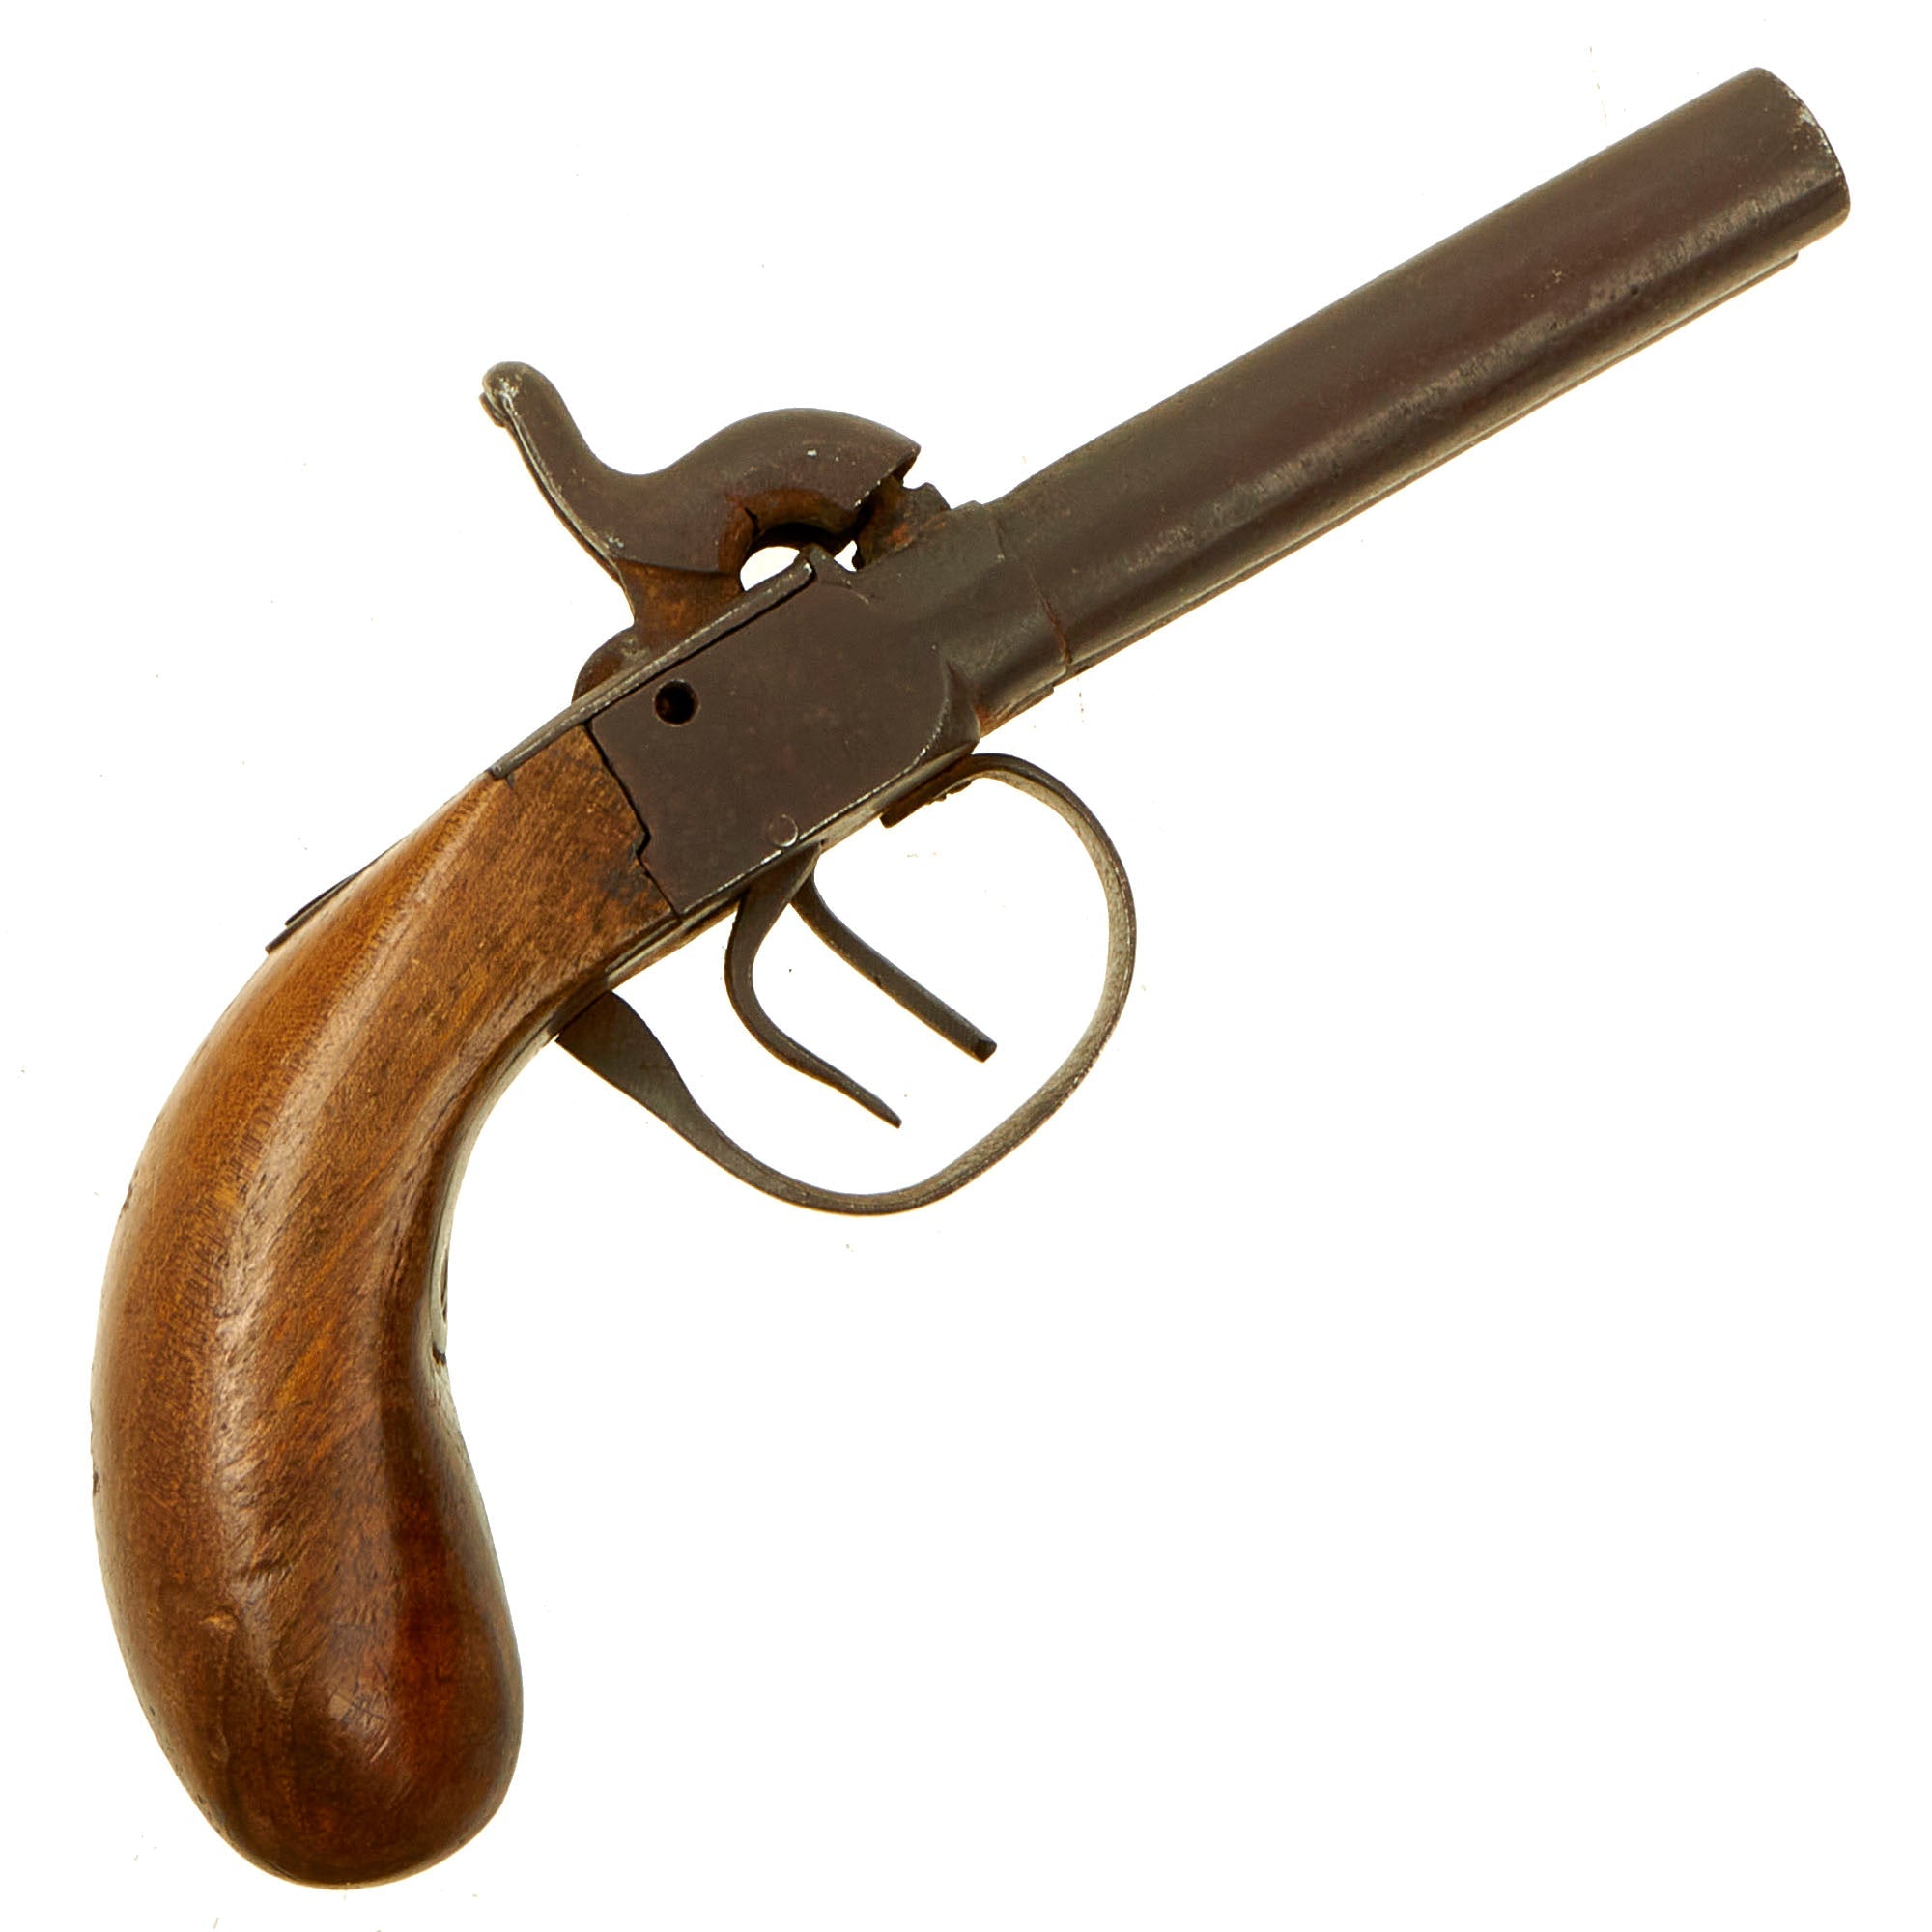 A 19th century brass pistol. Weapons & Militaria - Guns & Rifles - Auctionet